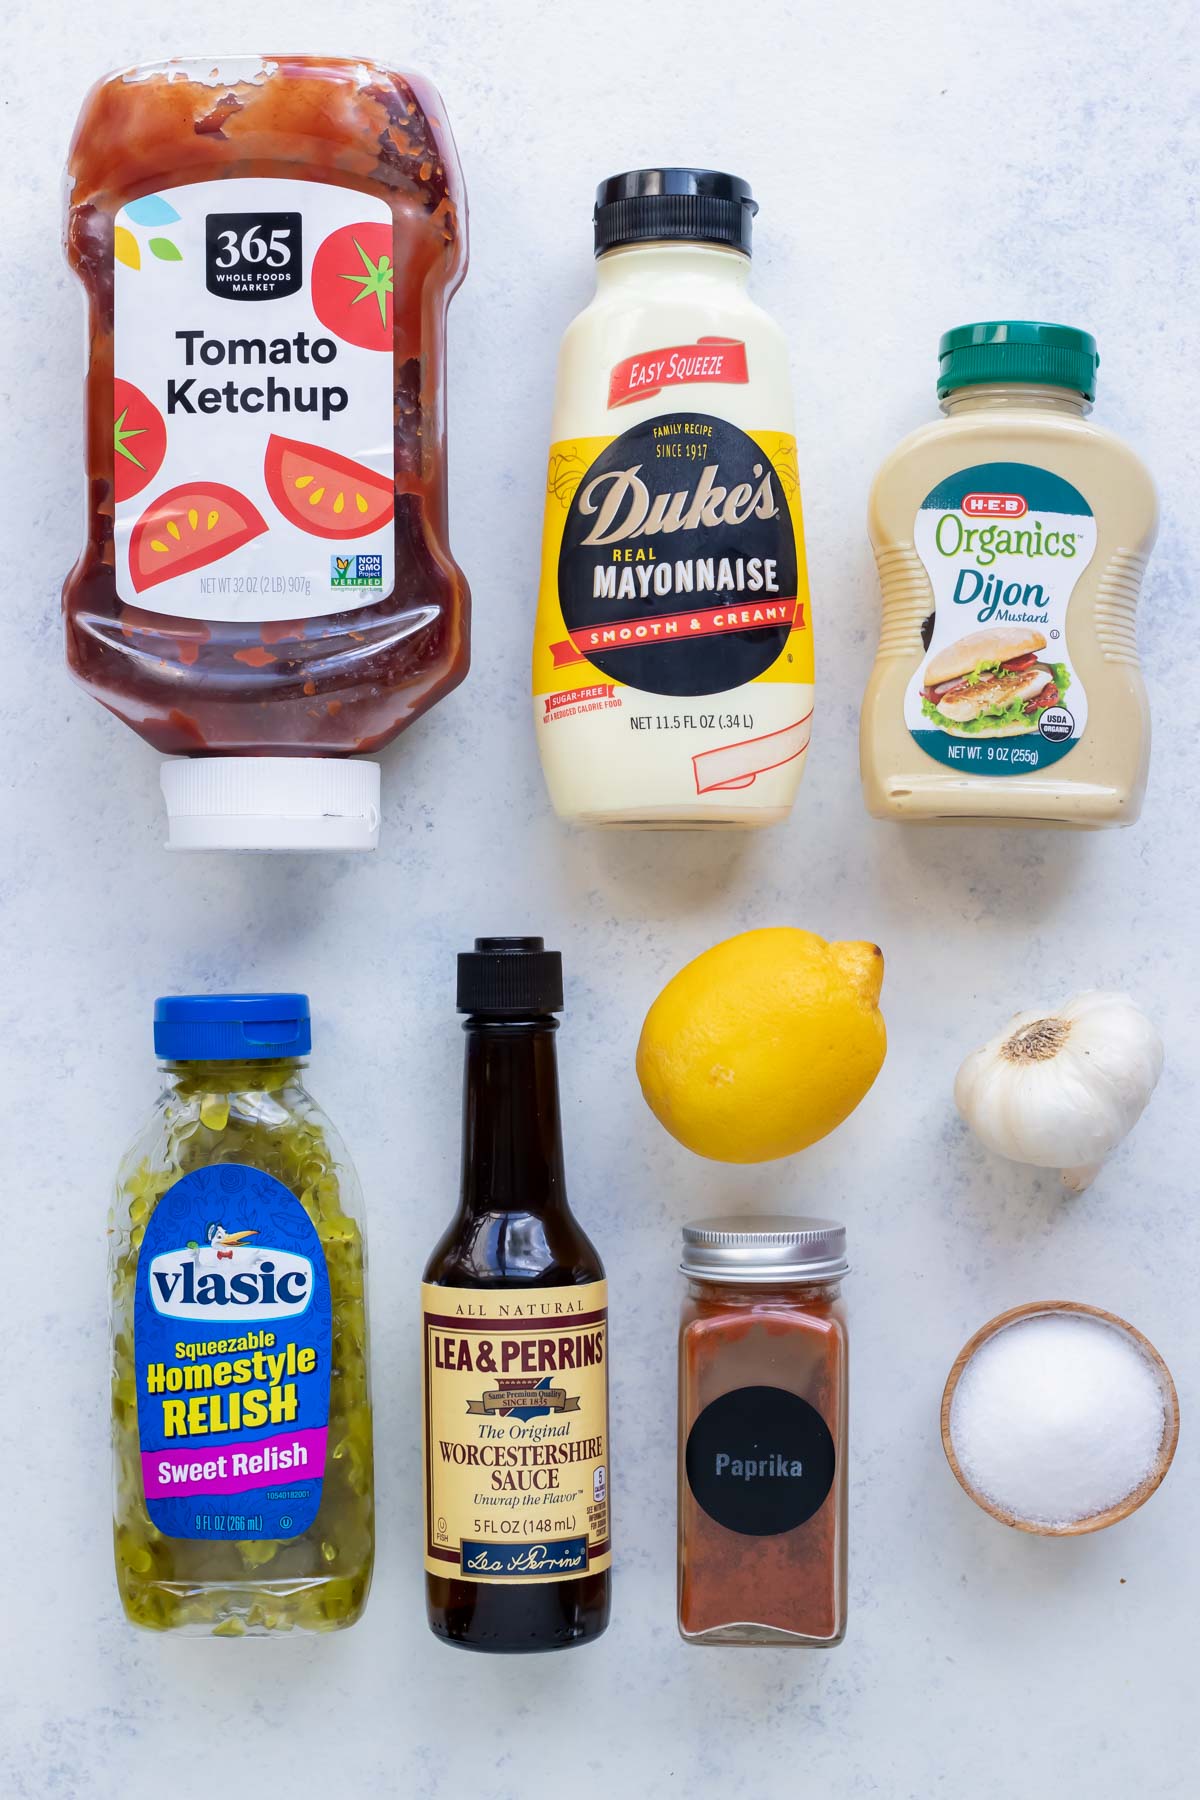 Mayo, ketchup, mustard, worcestershire, relish, salt, lemon juice, and seasonings are the ingredients in this recipe.